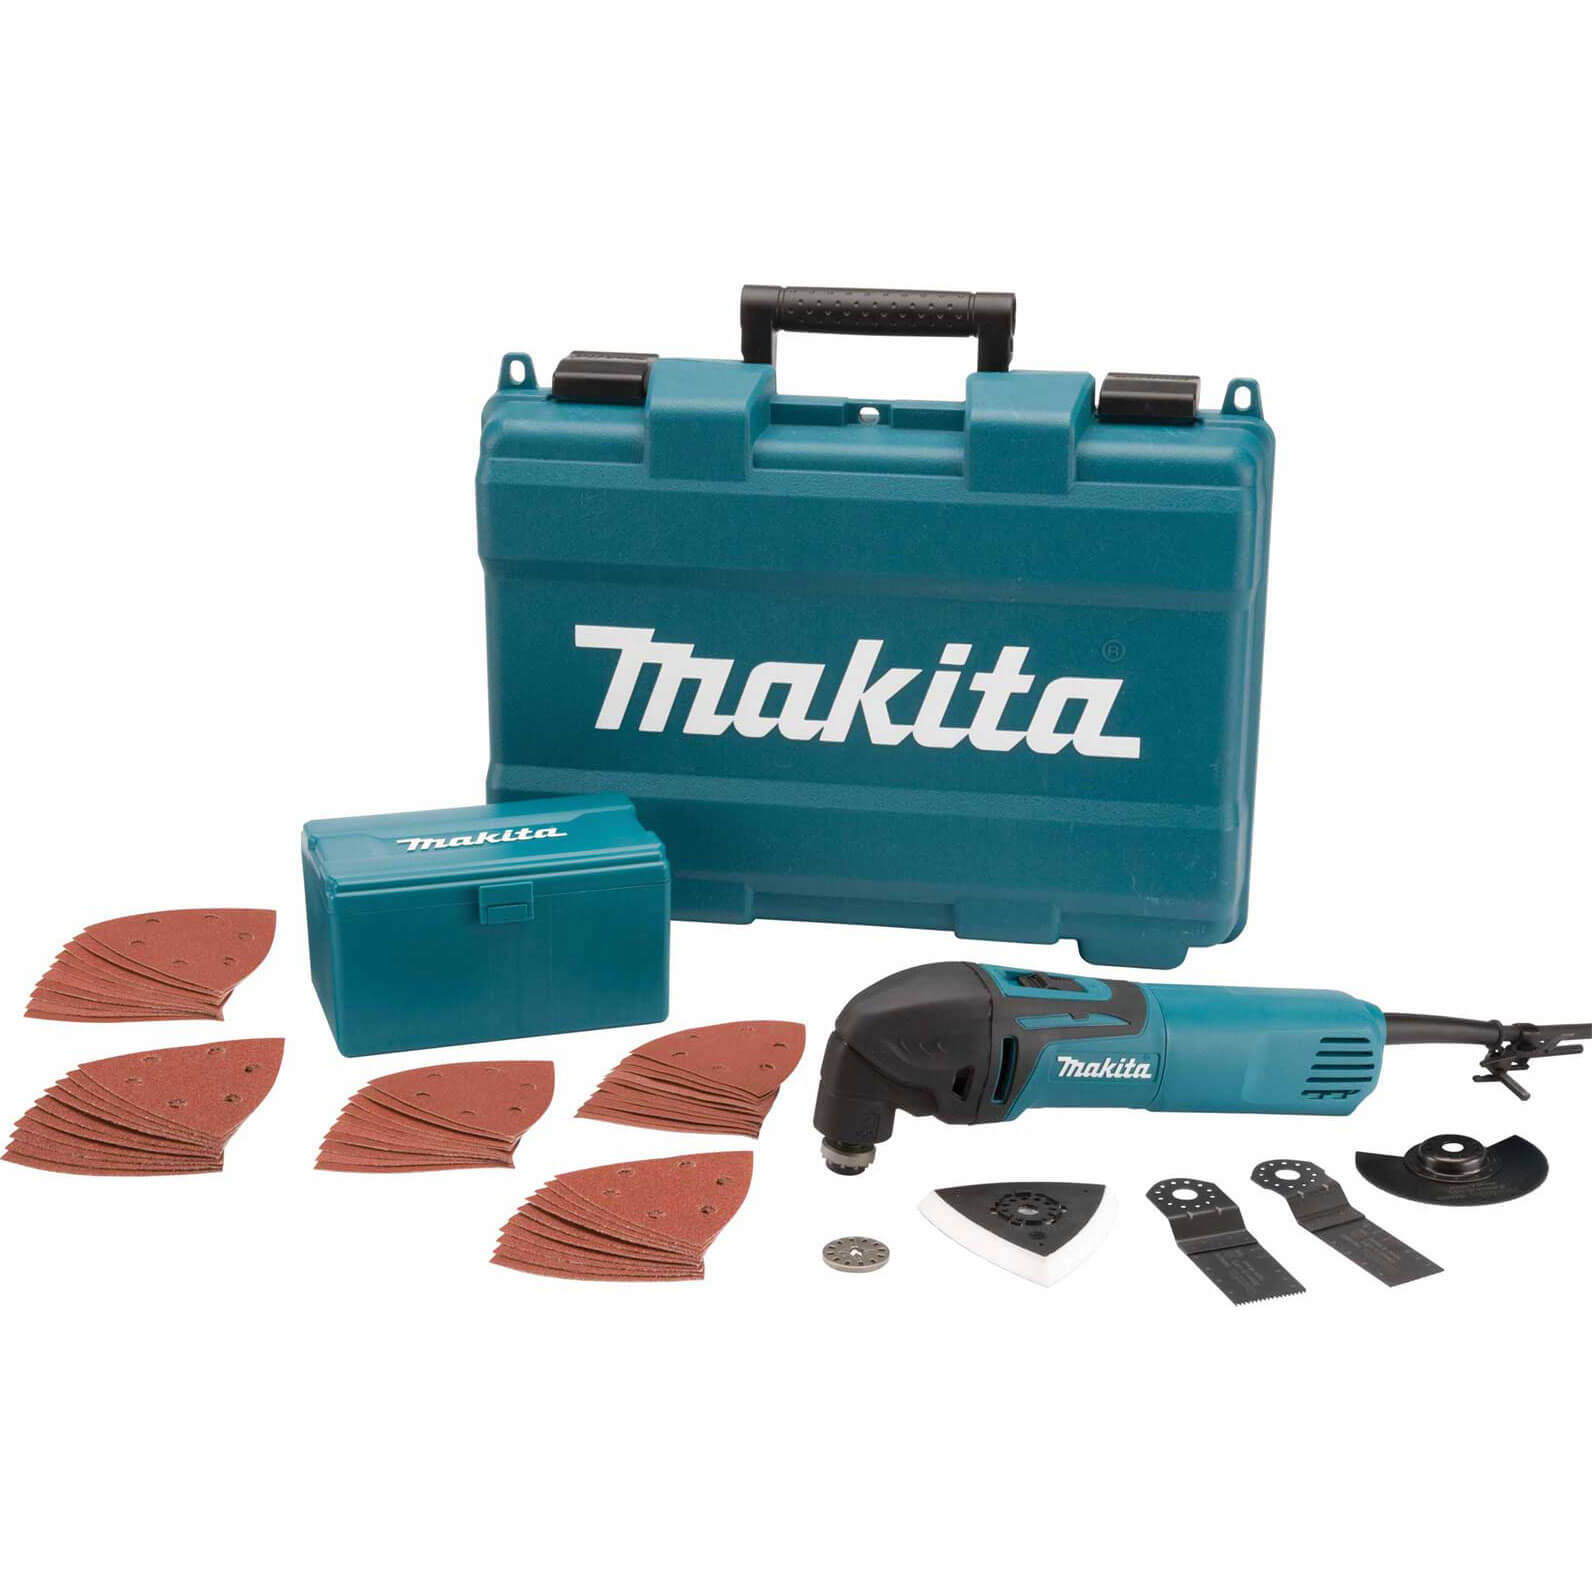 Image of Makita TM3000CX4 Oscillating Multi Tool 240v